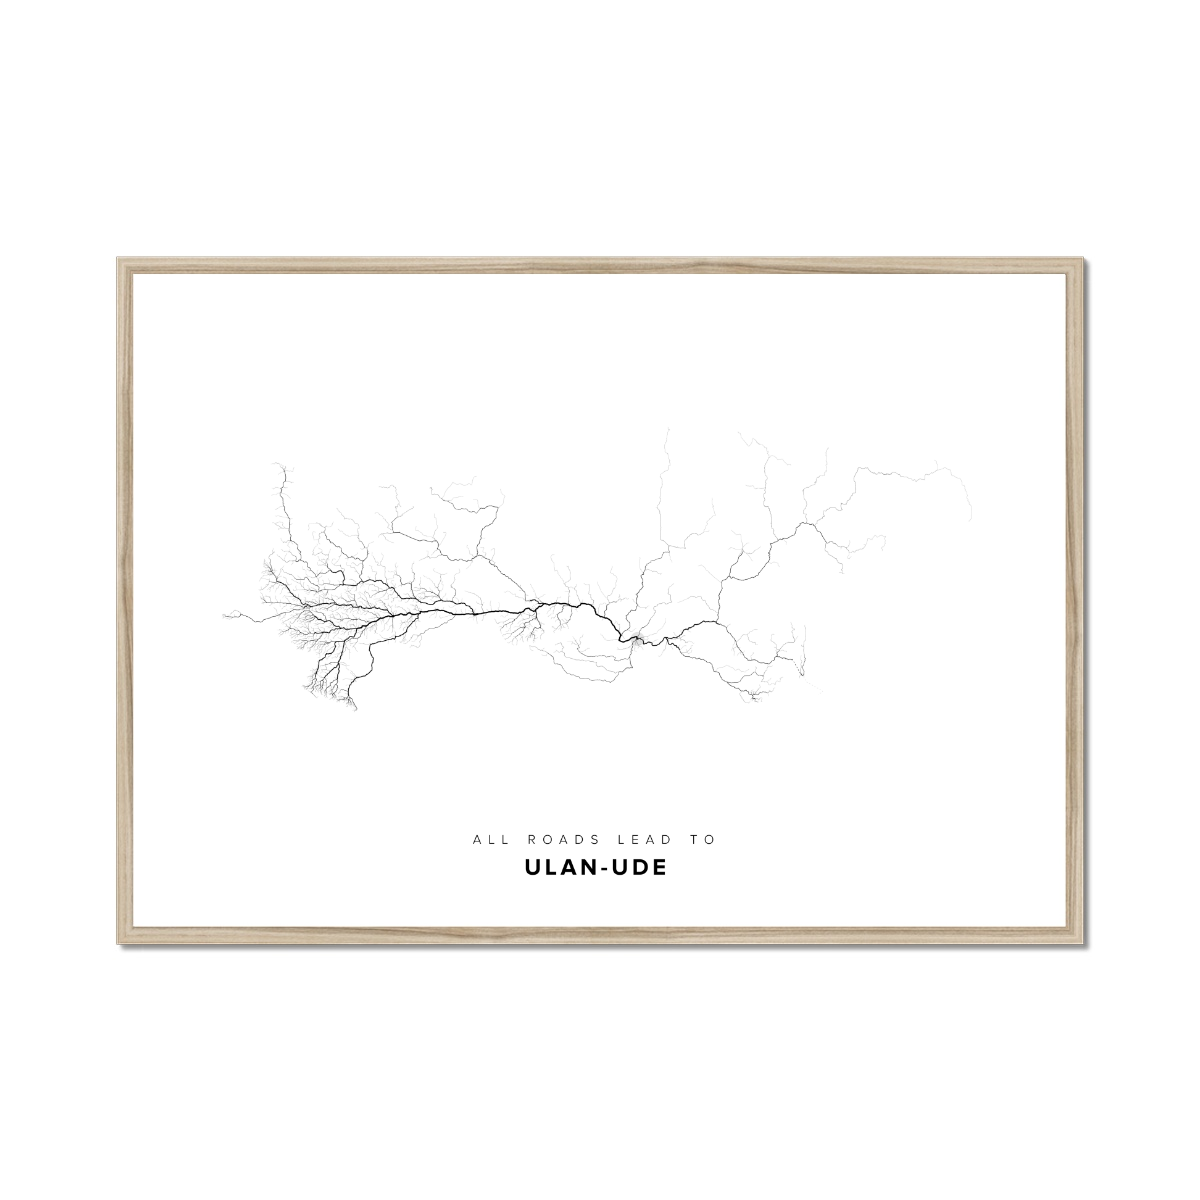 All roads lead to Ulan-Ude (Russian Federation) Fine Art Map Print